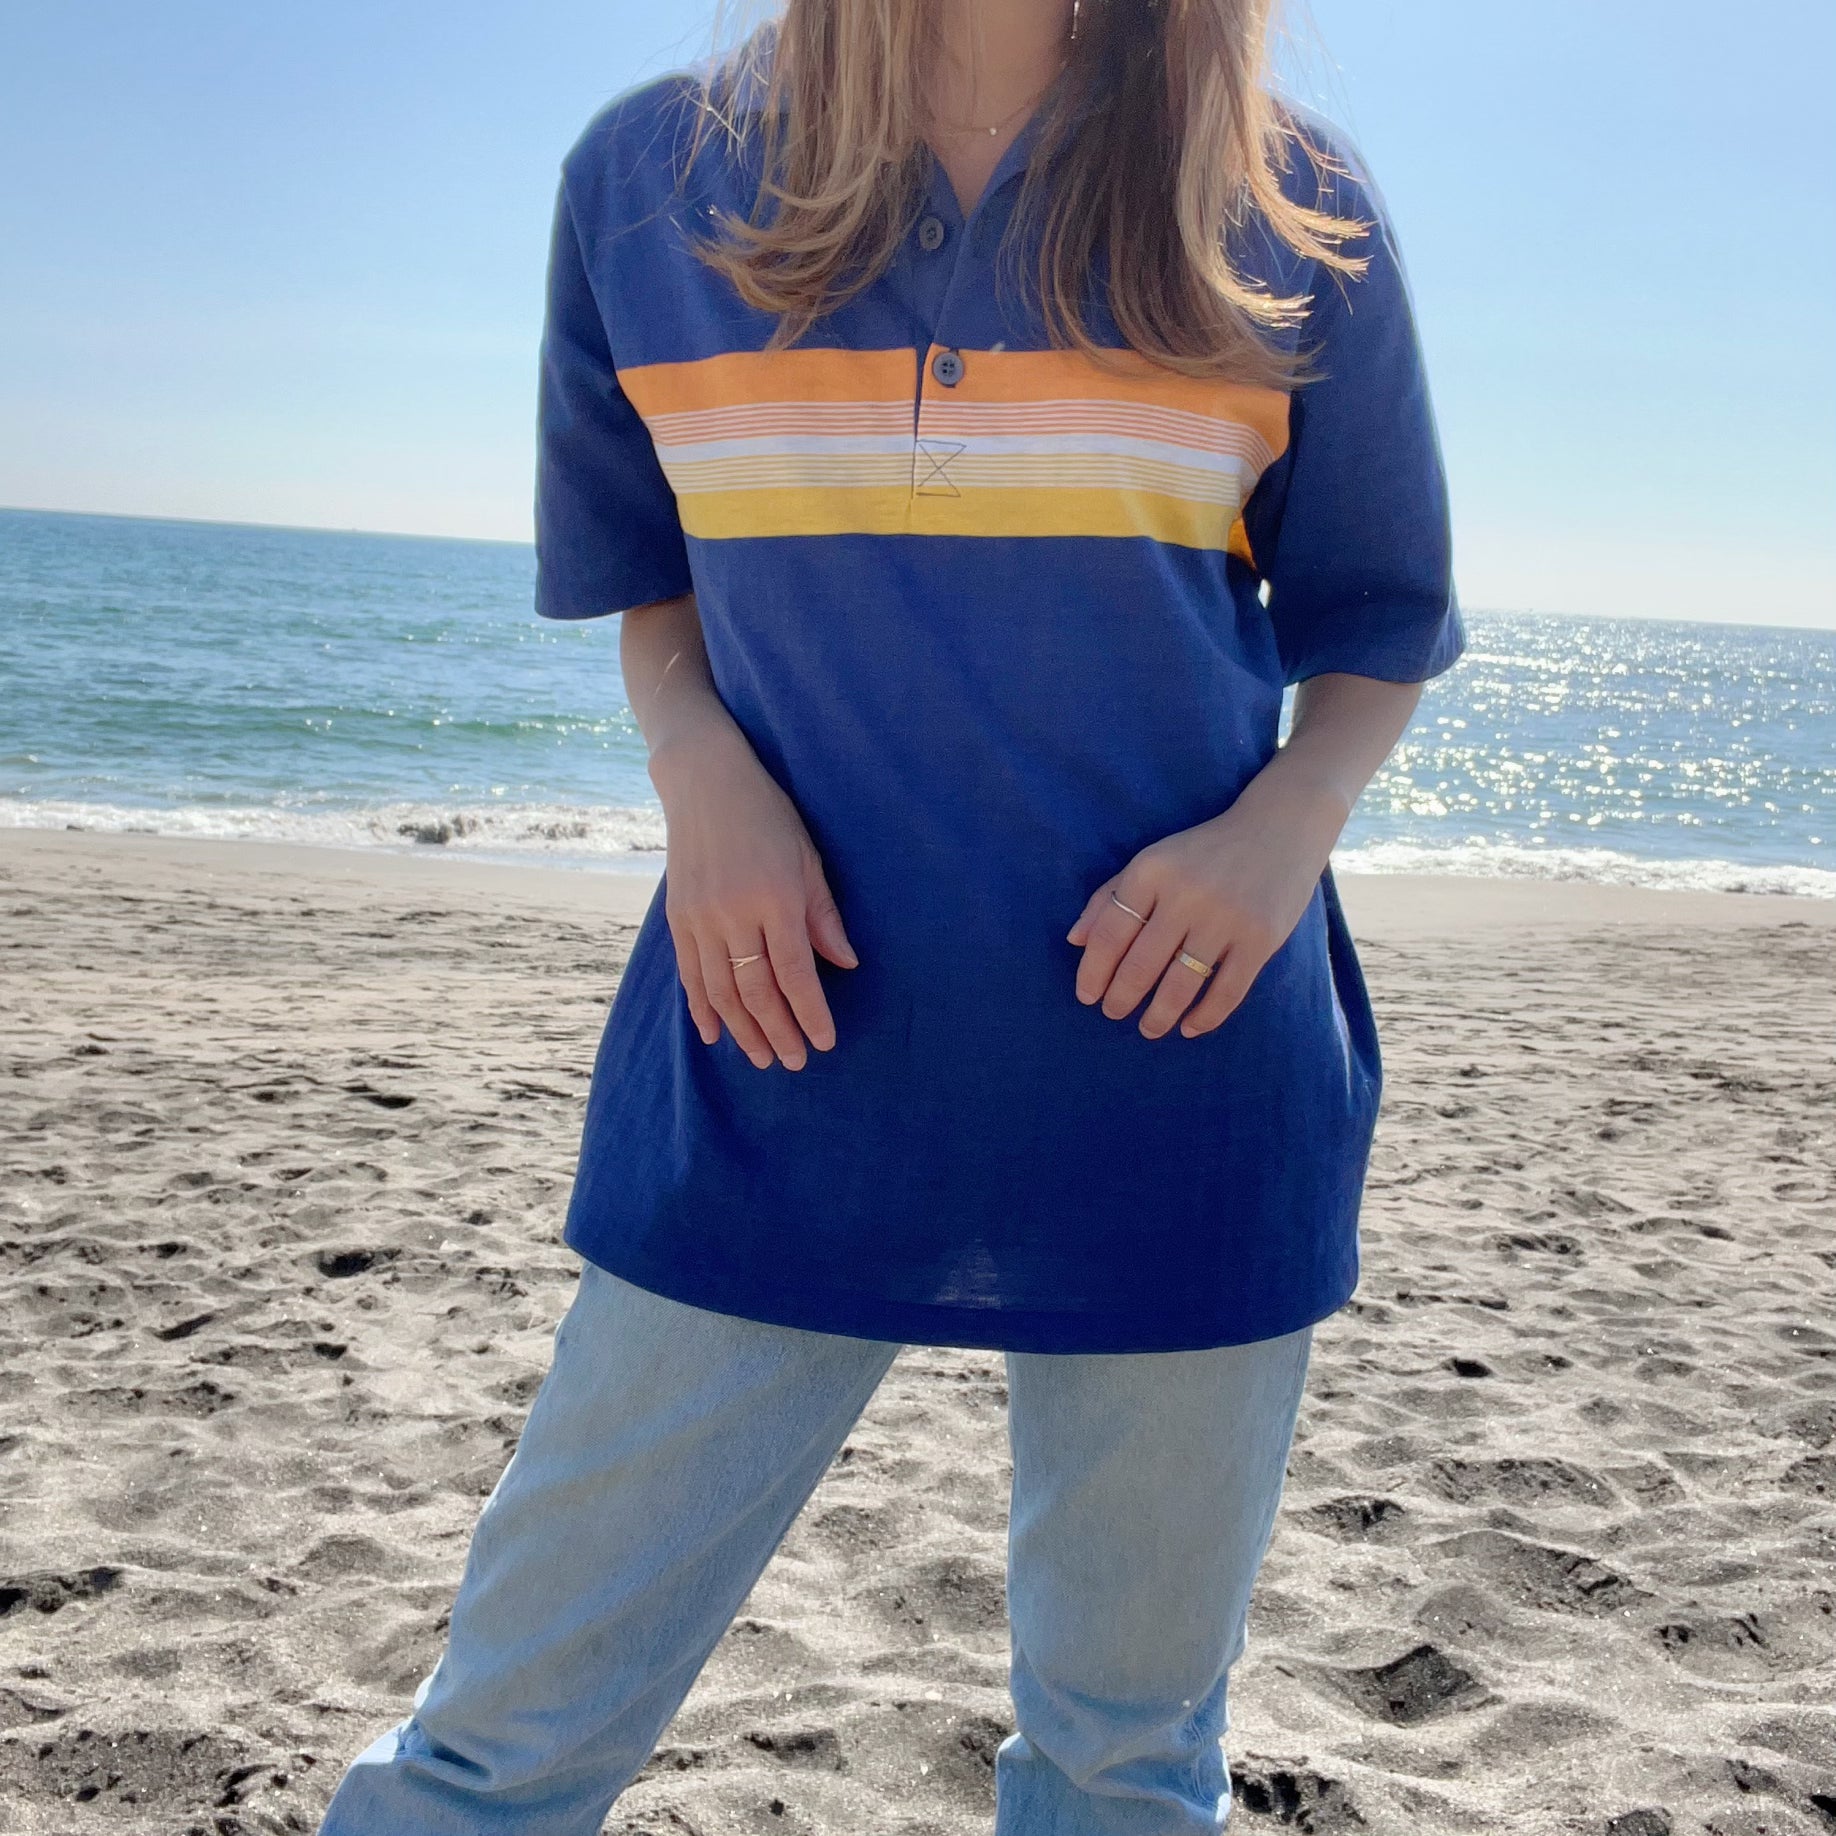 Ocean pacific】70's vintage OP Striped polo shirt (men's M) – sup